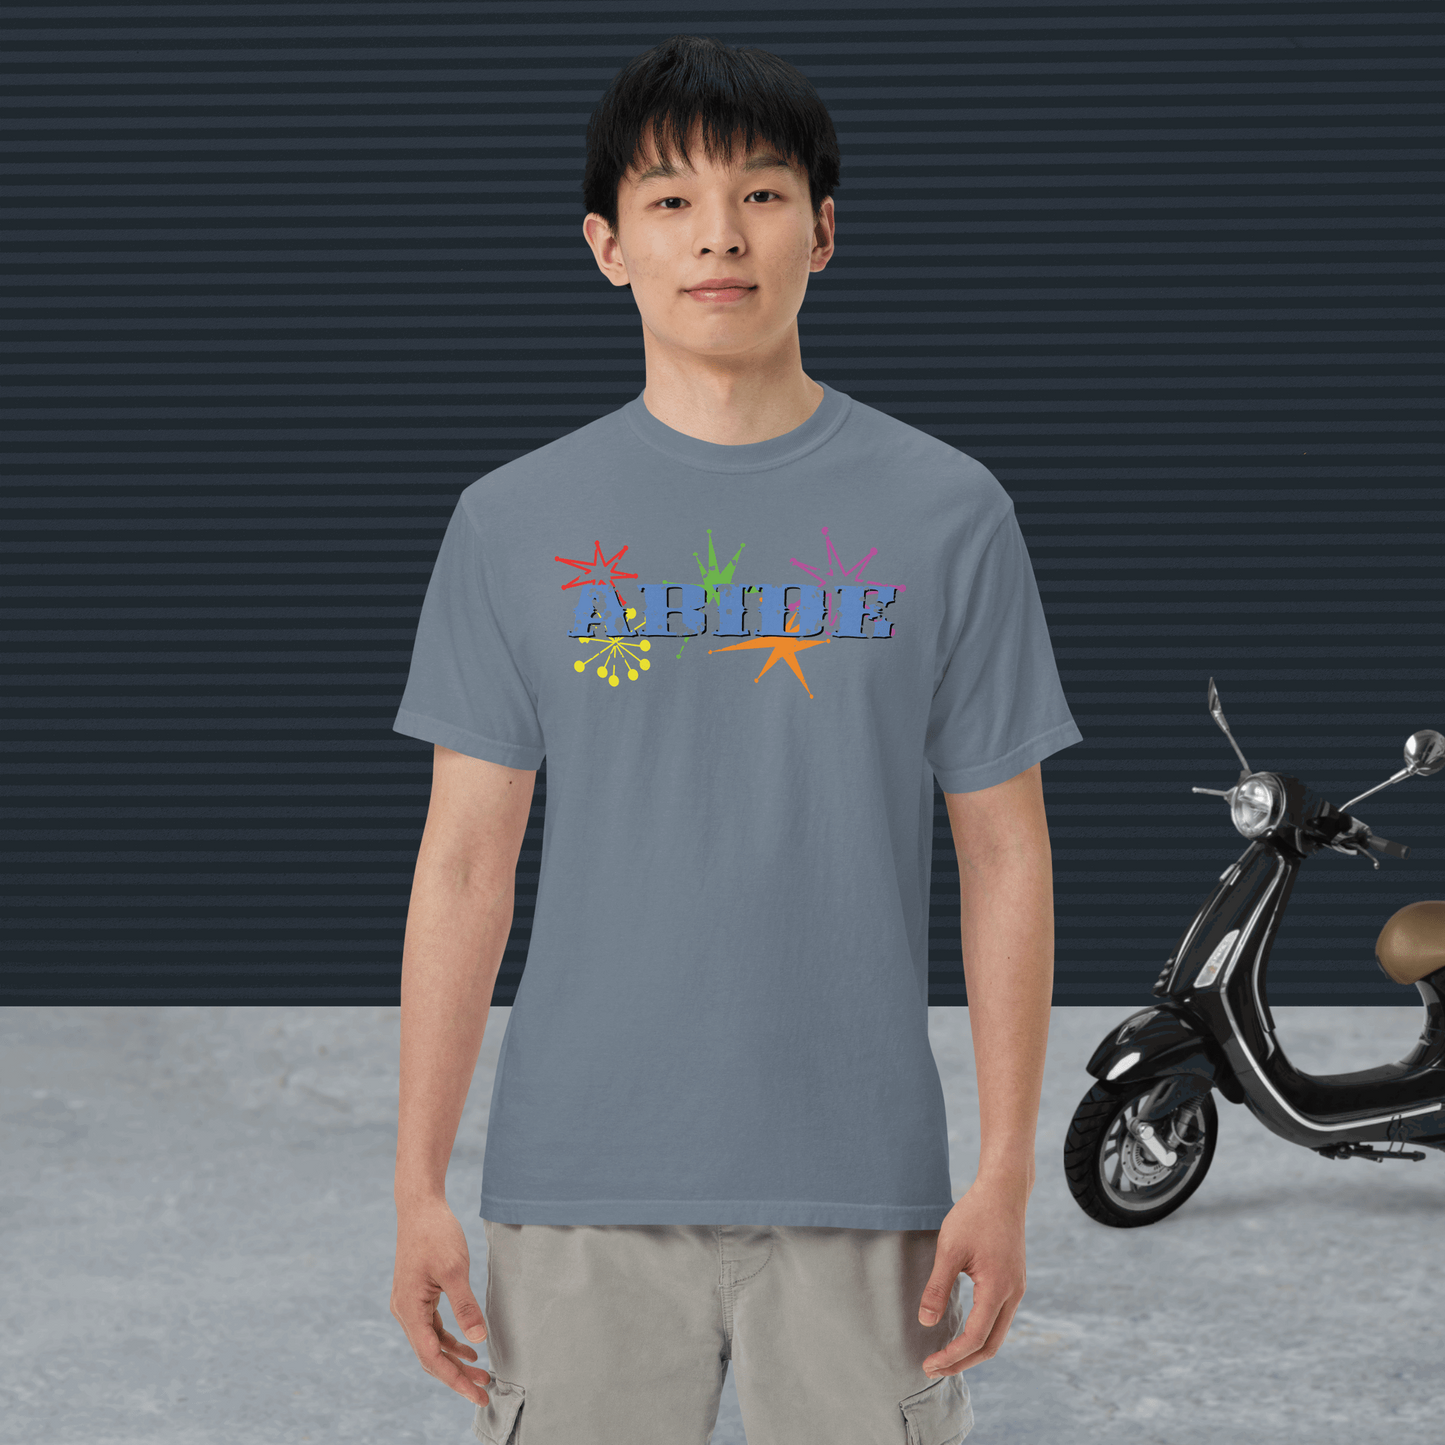 Abide Design For Men - The Dude Abides - T-shirt - abide - design - Dude